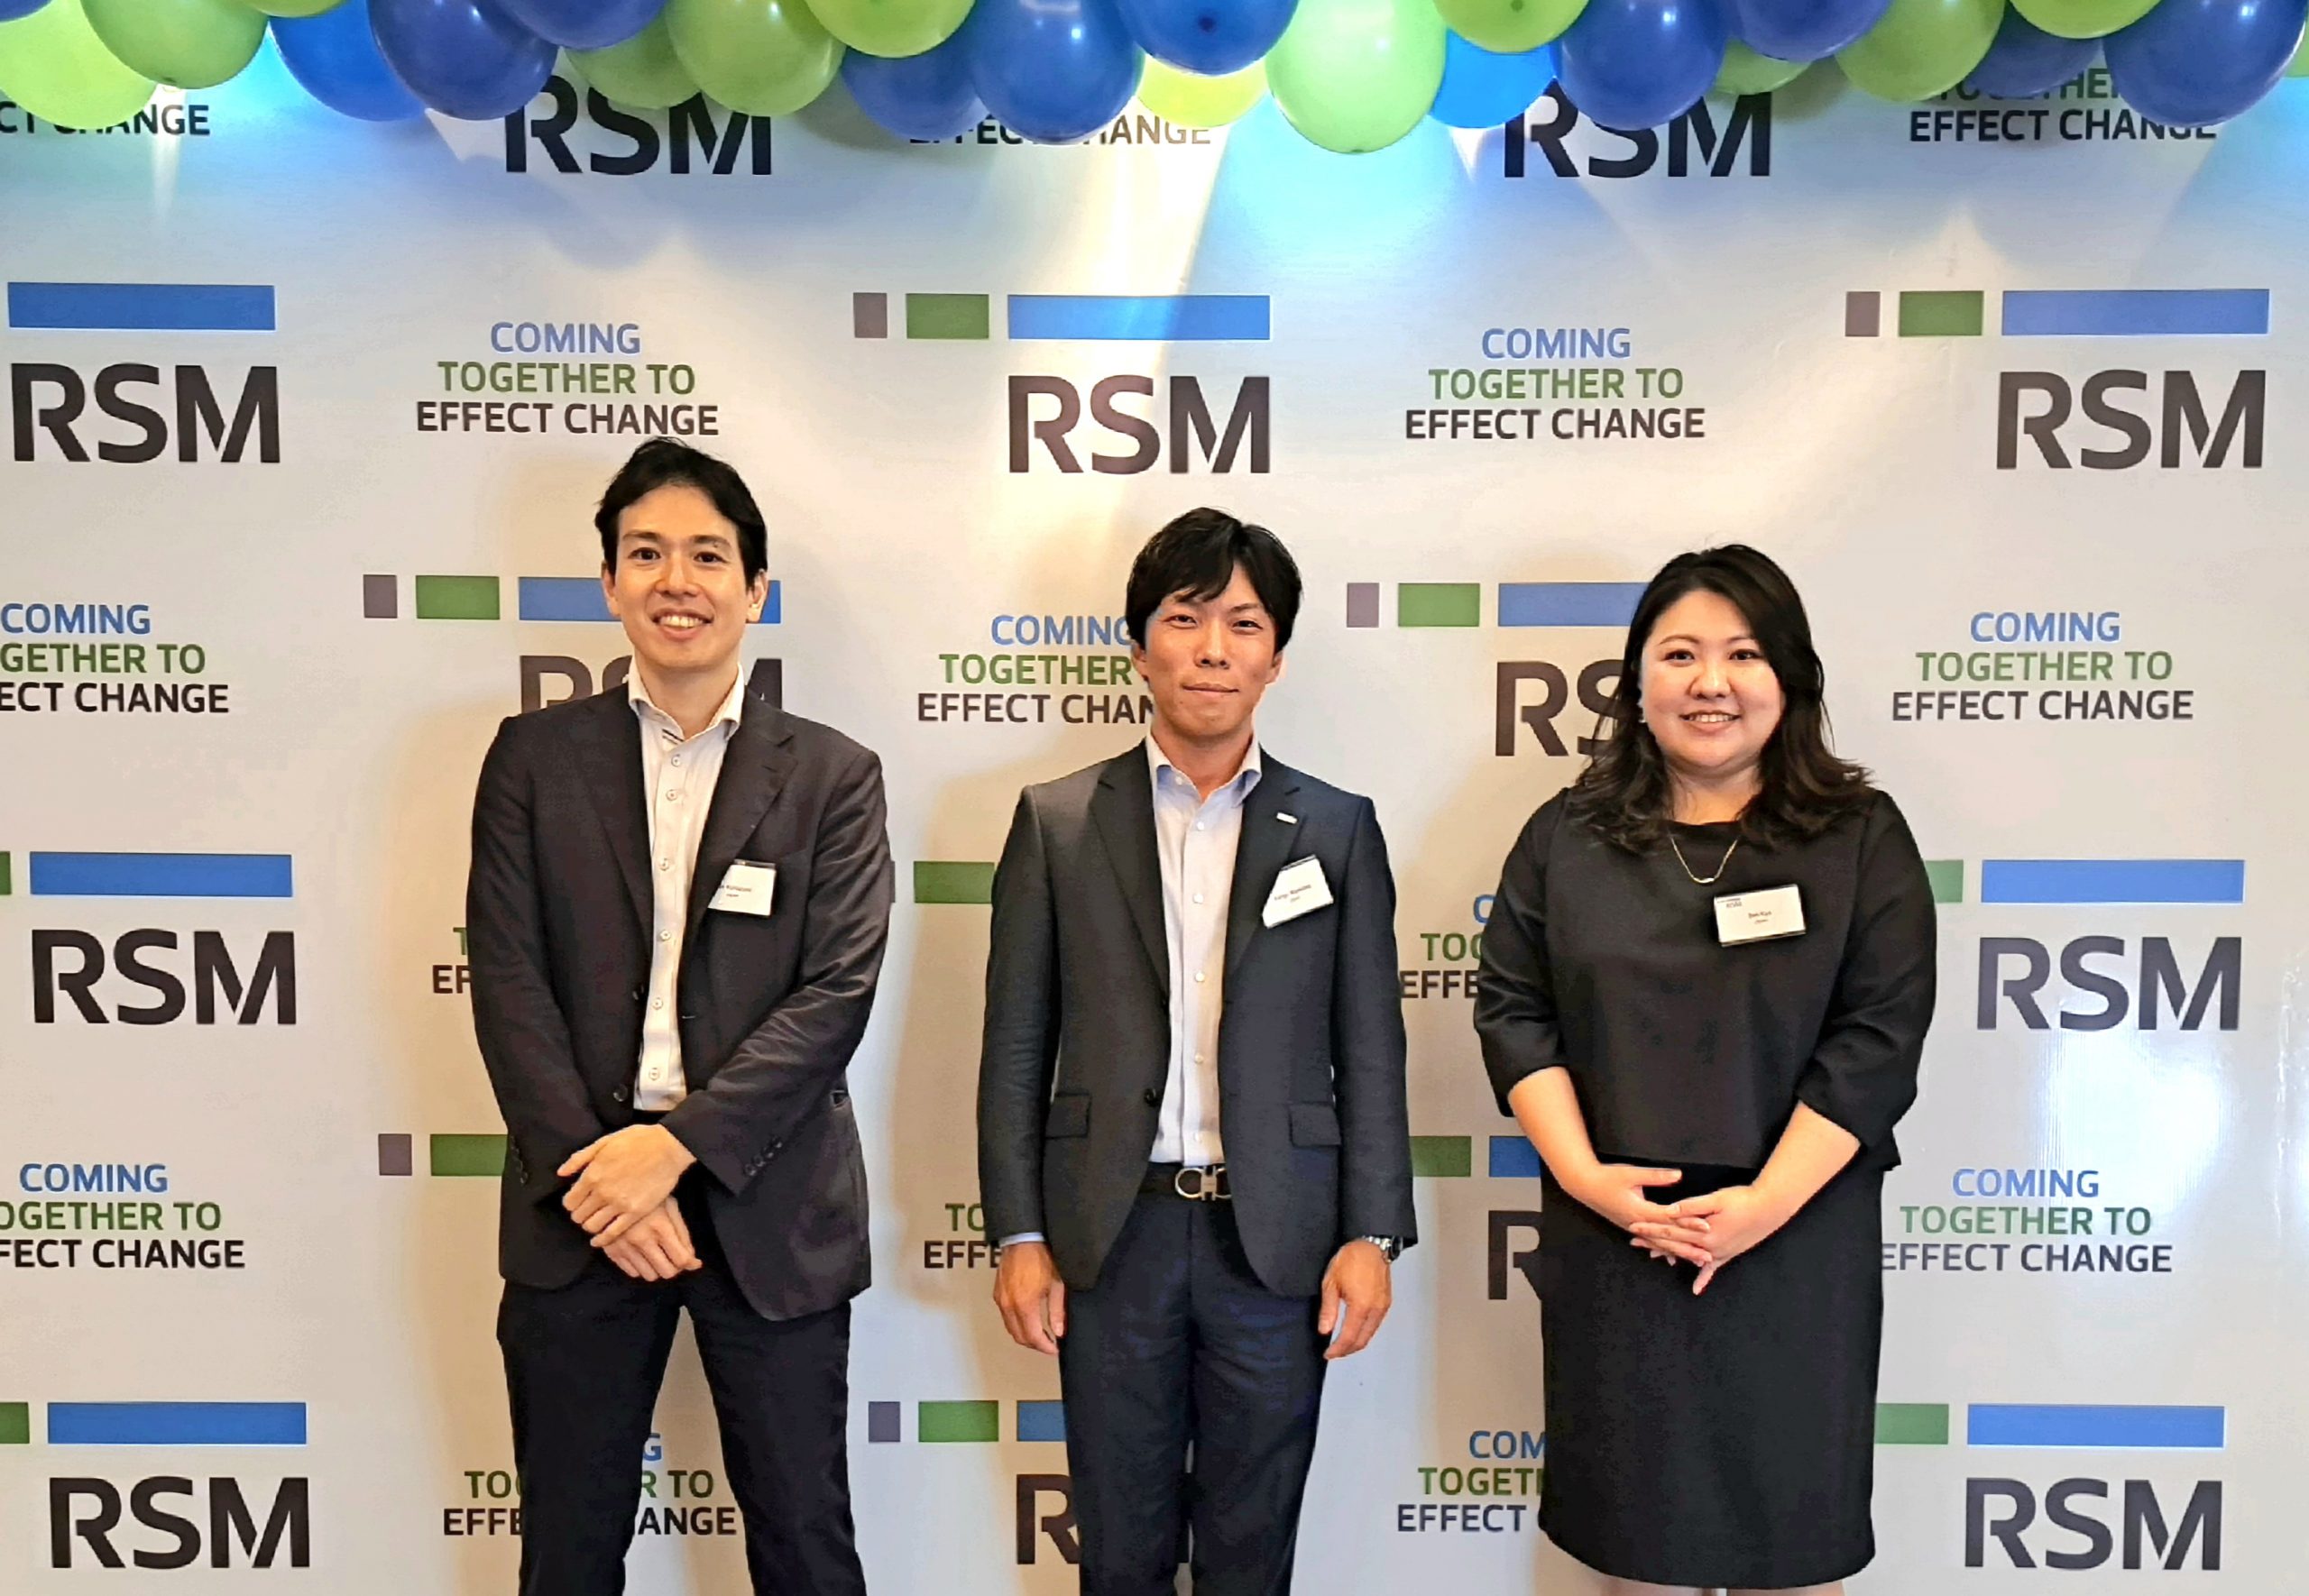 RSM Shiodome Partners: Mr. Maekawa (Managing Partner), Mr. Kurozumi (International Contact Partner), and Ms. Kyo (International Contact Director)